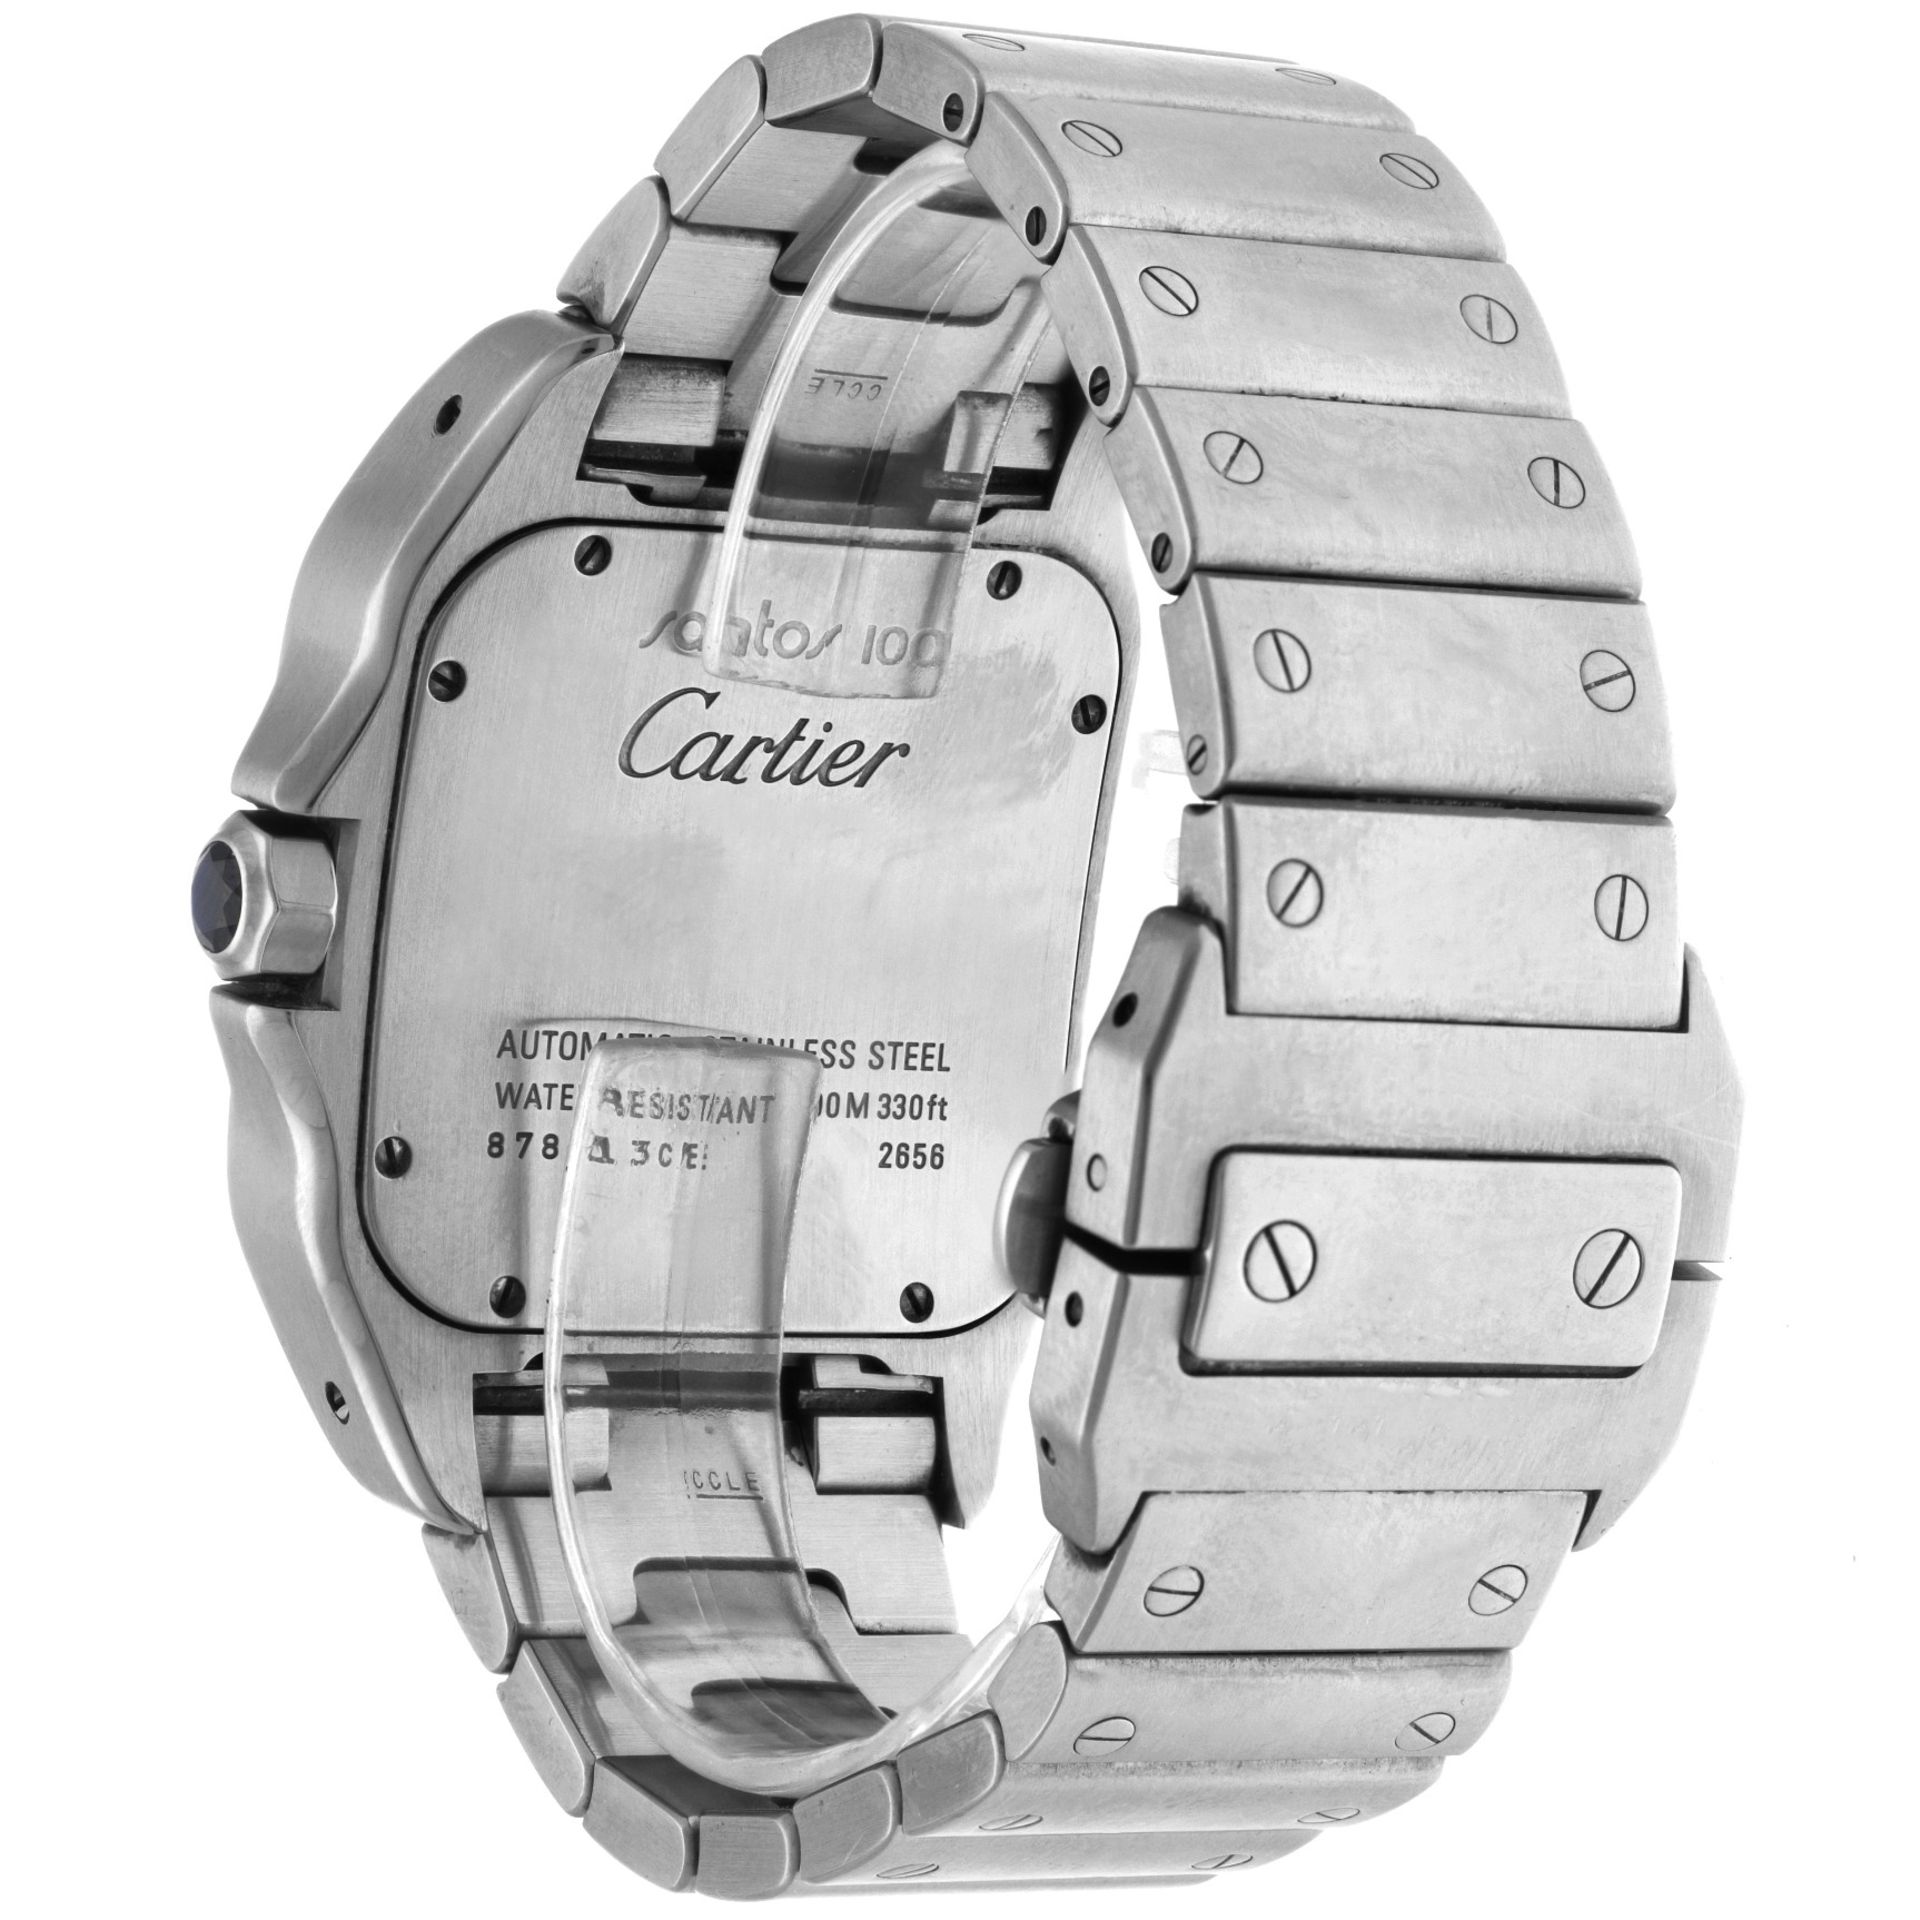 No Reserve - Cartier Santos 100 XL 2656 - Men's watch.  - Image 3 of 6